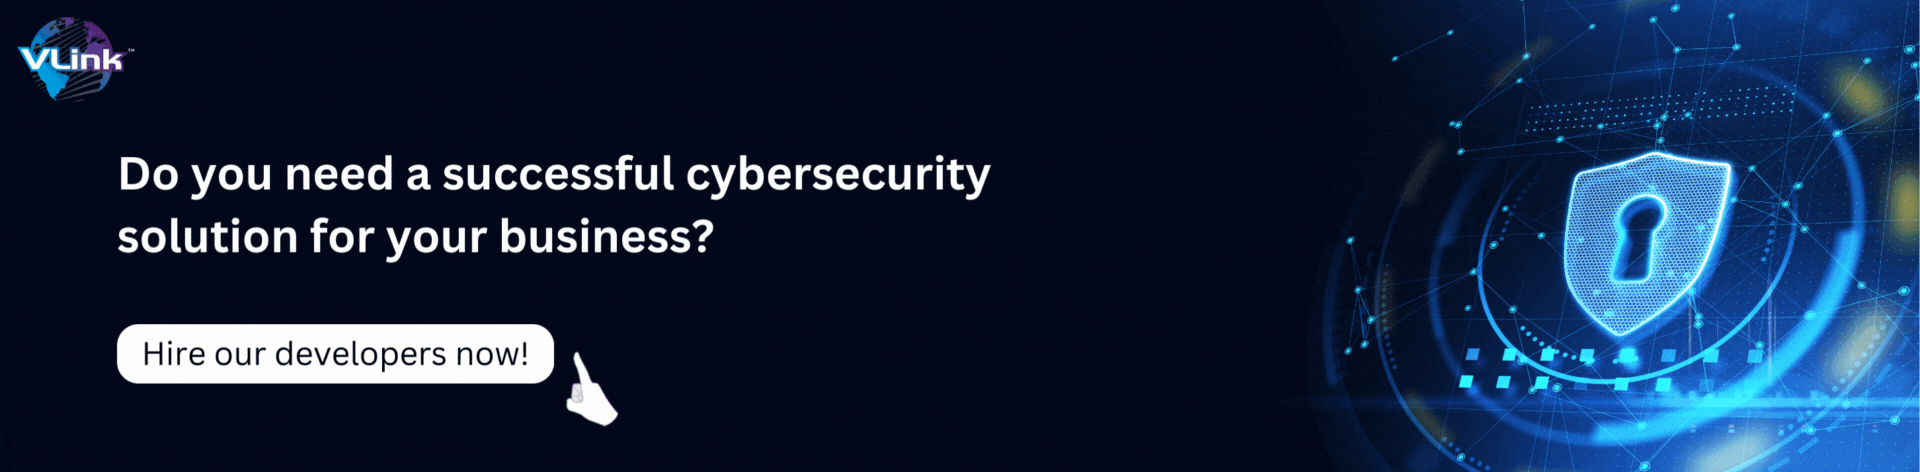 biggest-cybersecurity-threats-cta1